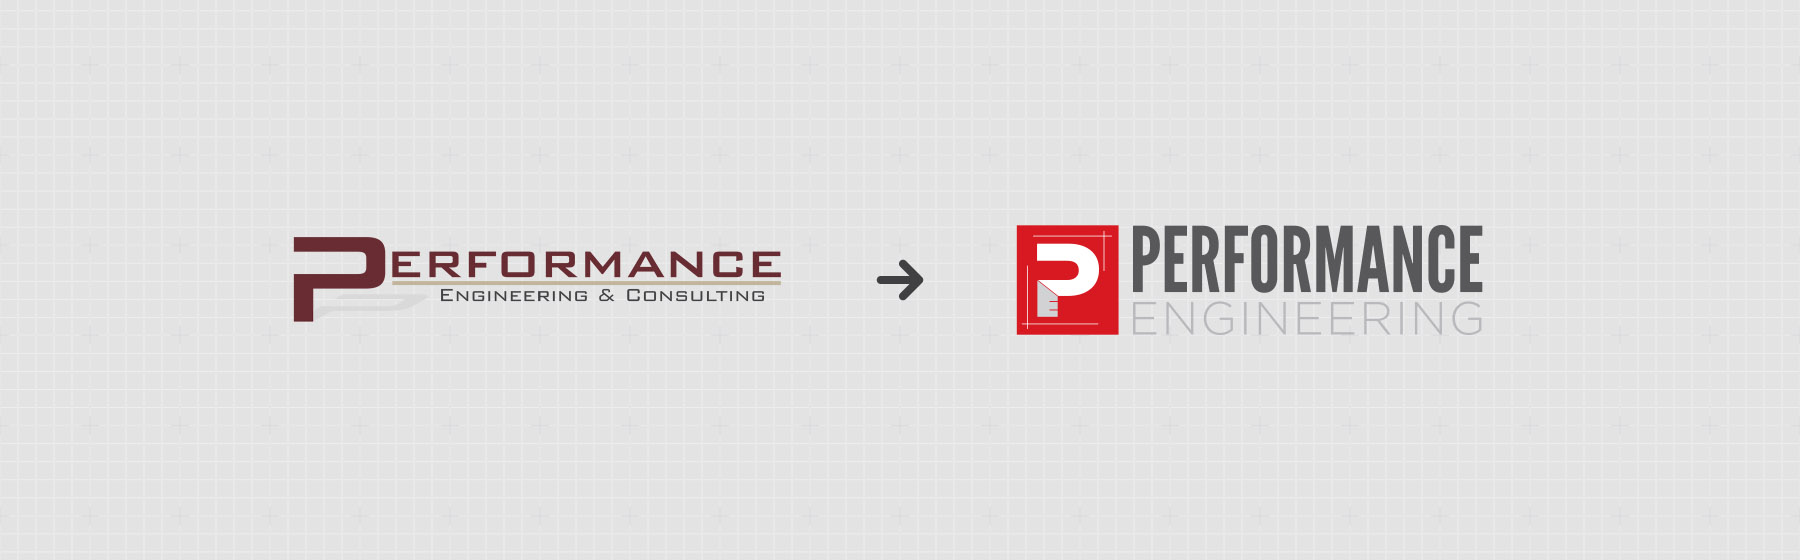 Performance Engineering - Logo Redesign